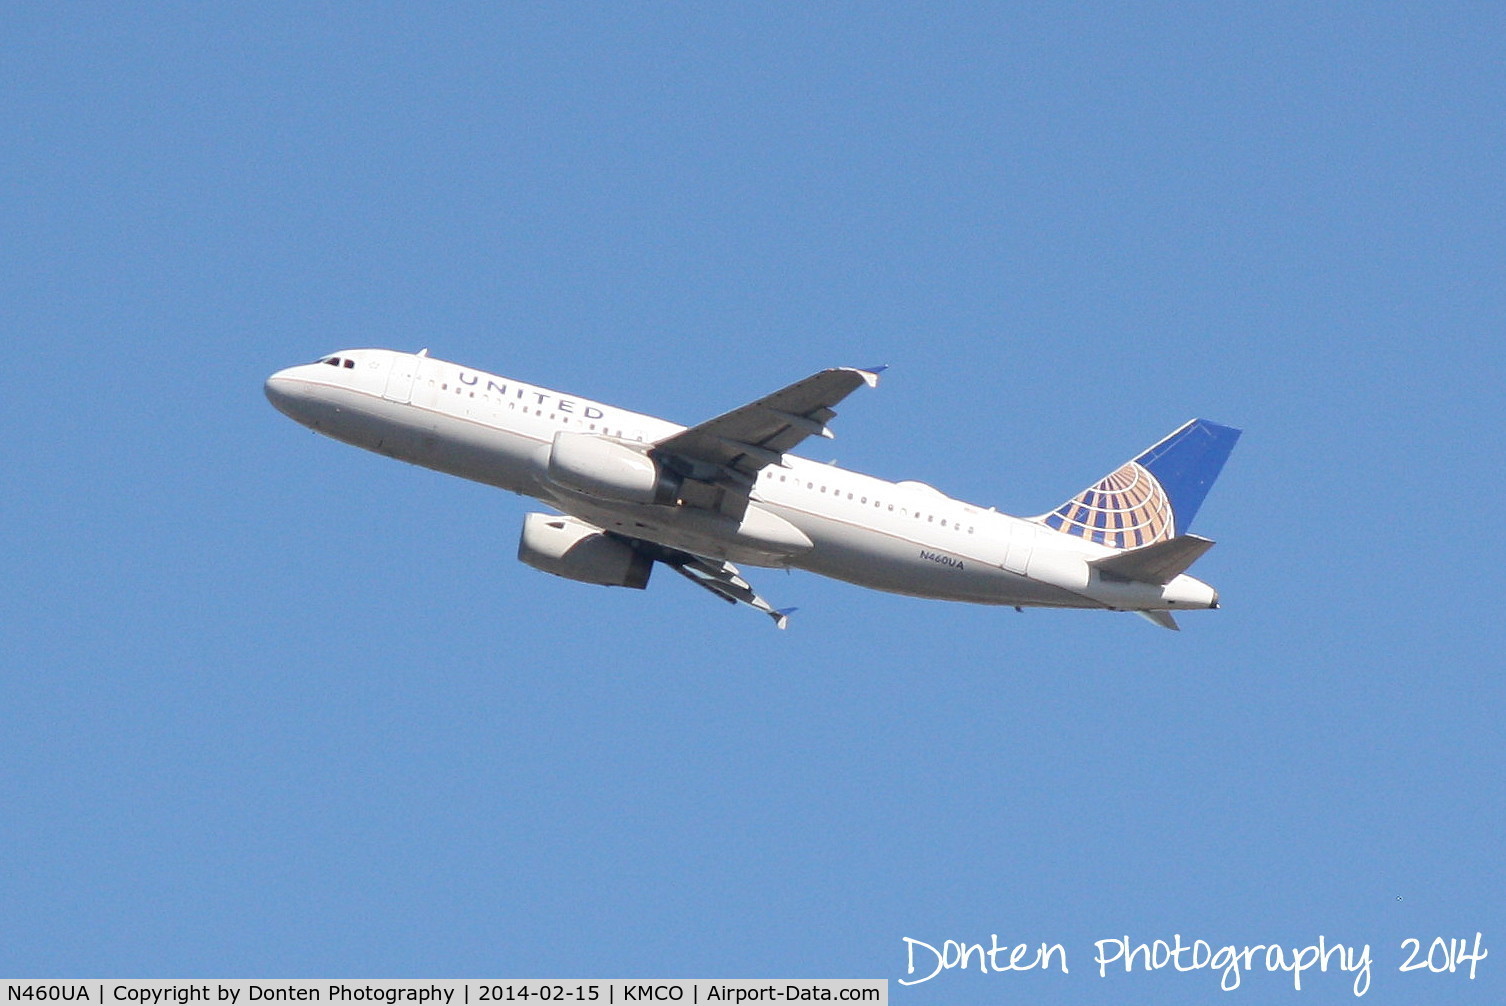 N460UA, 2000 Airbus A320-232 C/N 1248, United Flight 759 (N460UA) departs Orlando International Airport enroute to Chicago-O'Hare International Airport